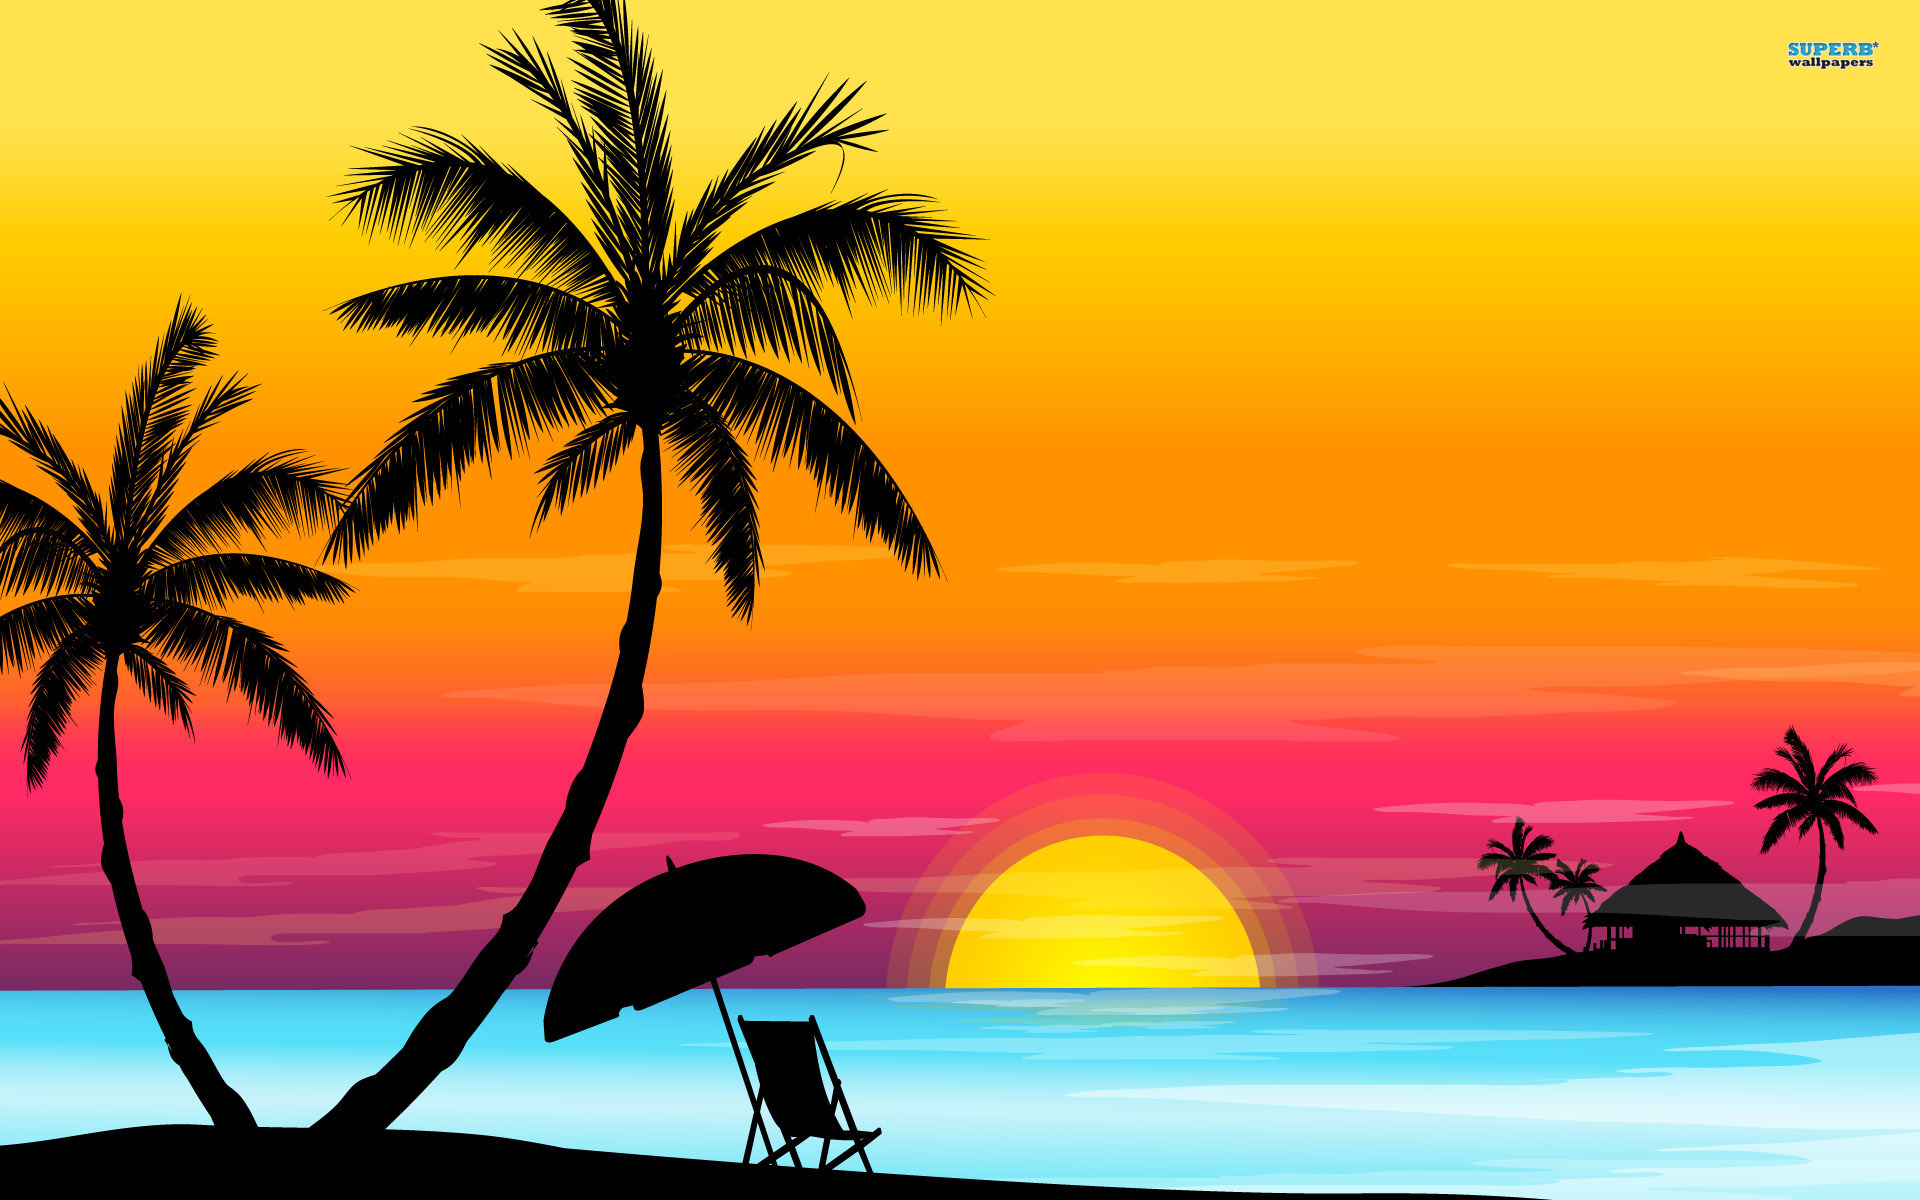 Sunset beach background clipart